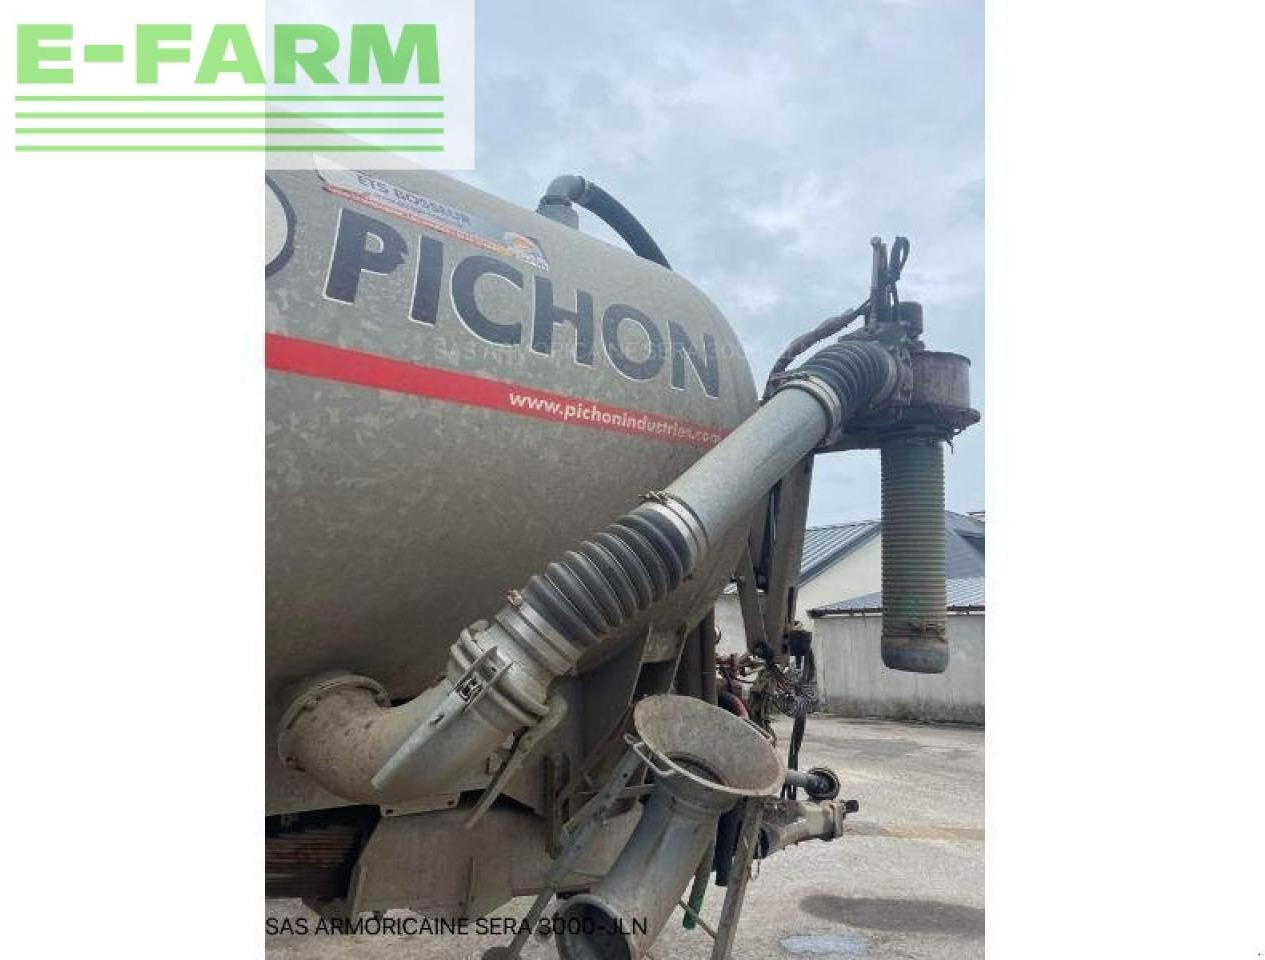 Traktor Pichon tci 18500: bilde 5